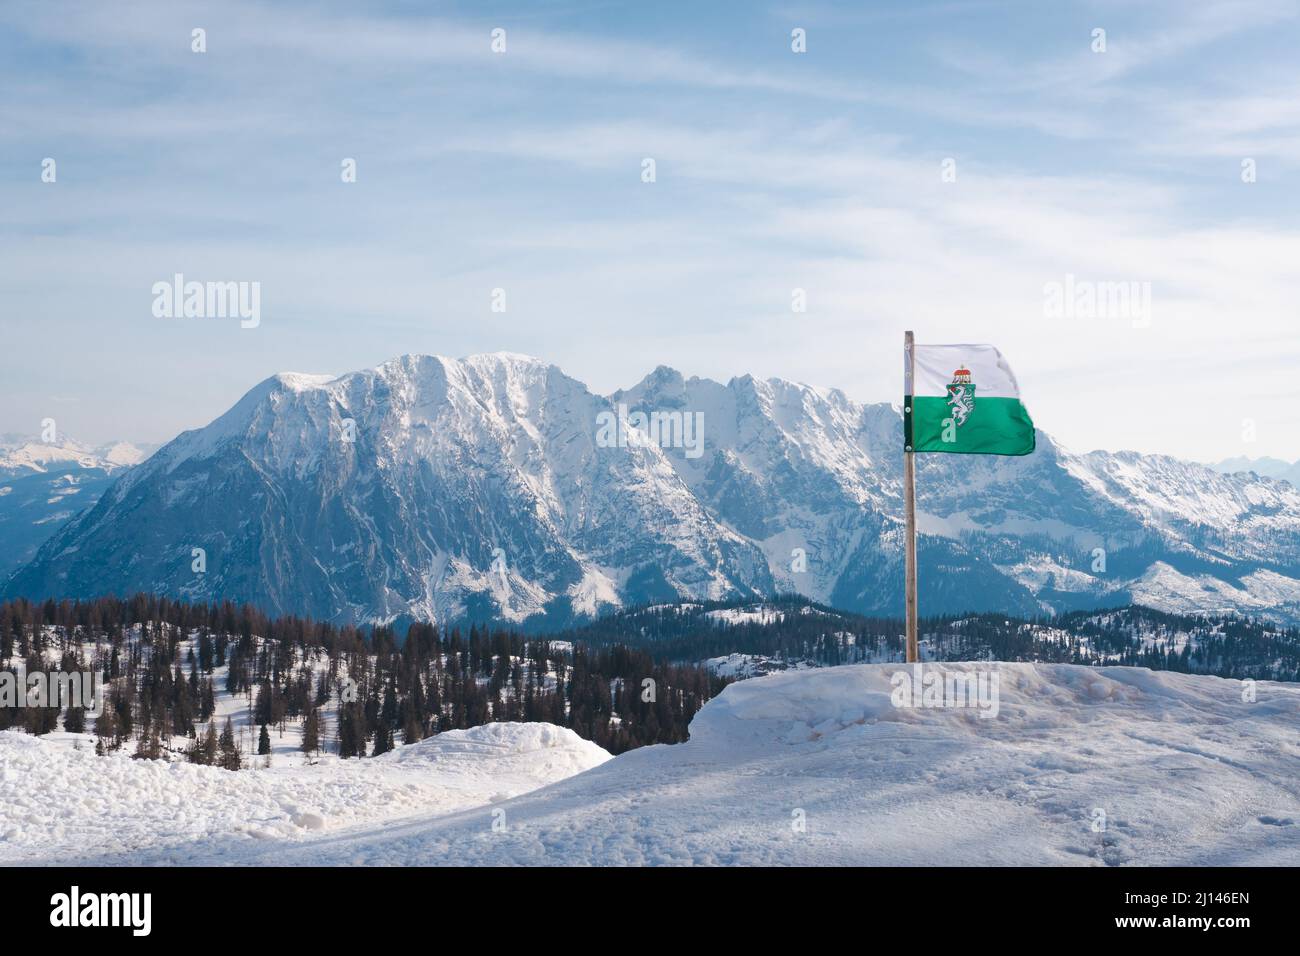 Grimming in the Ennstal in Styria, Austria. Wonderful winter landscape in the European Alps. Stock Photo